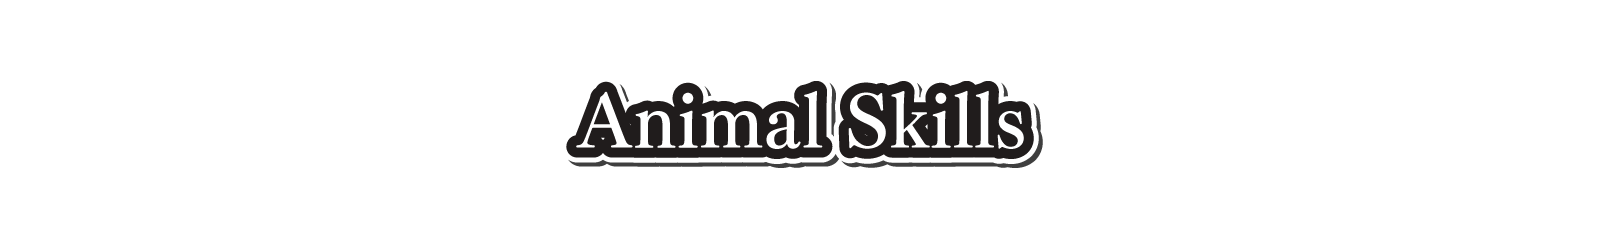 Animal Skills